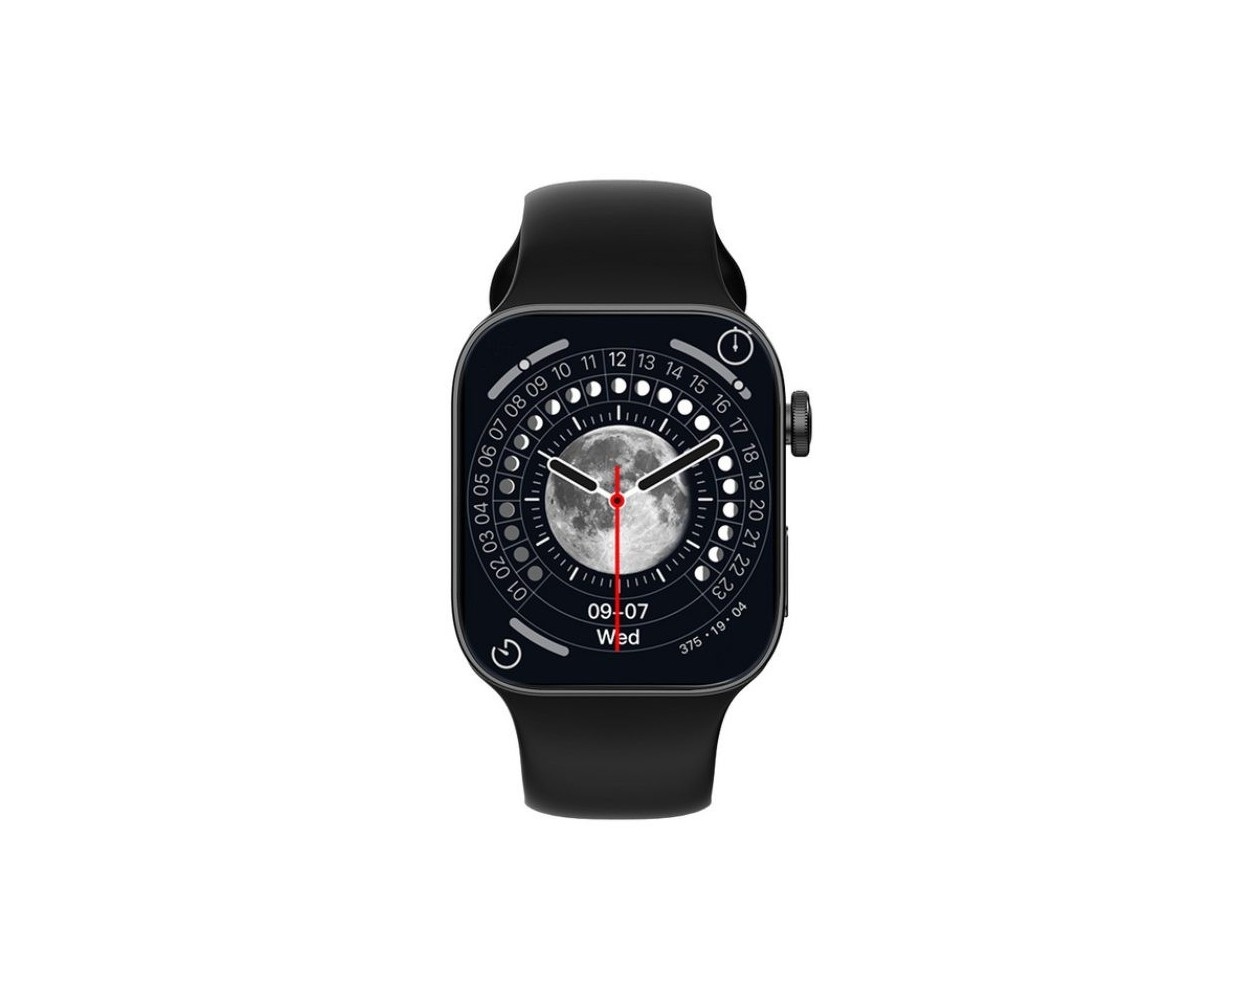 Smartwatch – i14 PRO - 887318 - Black